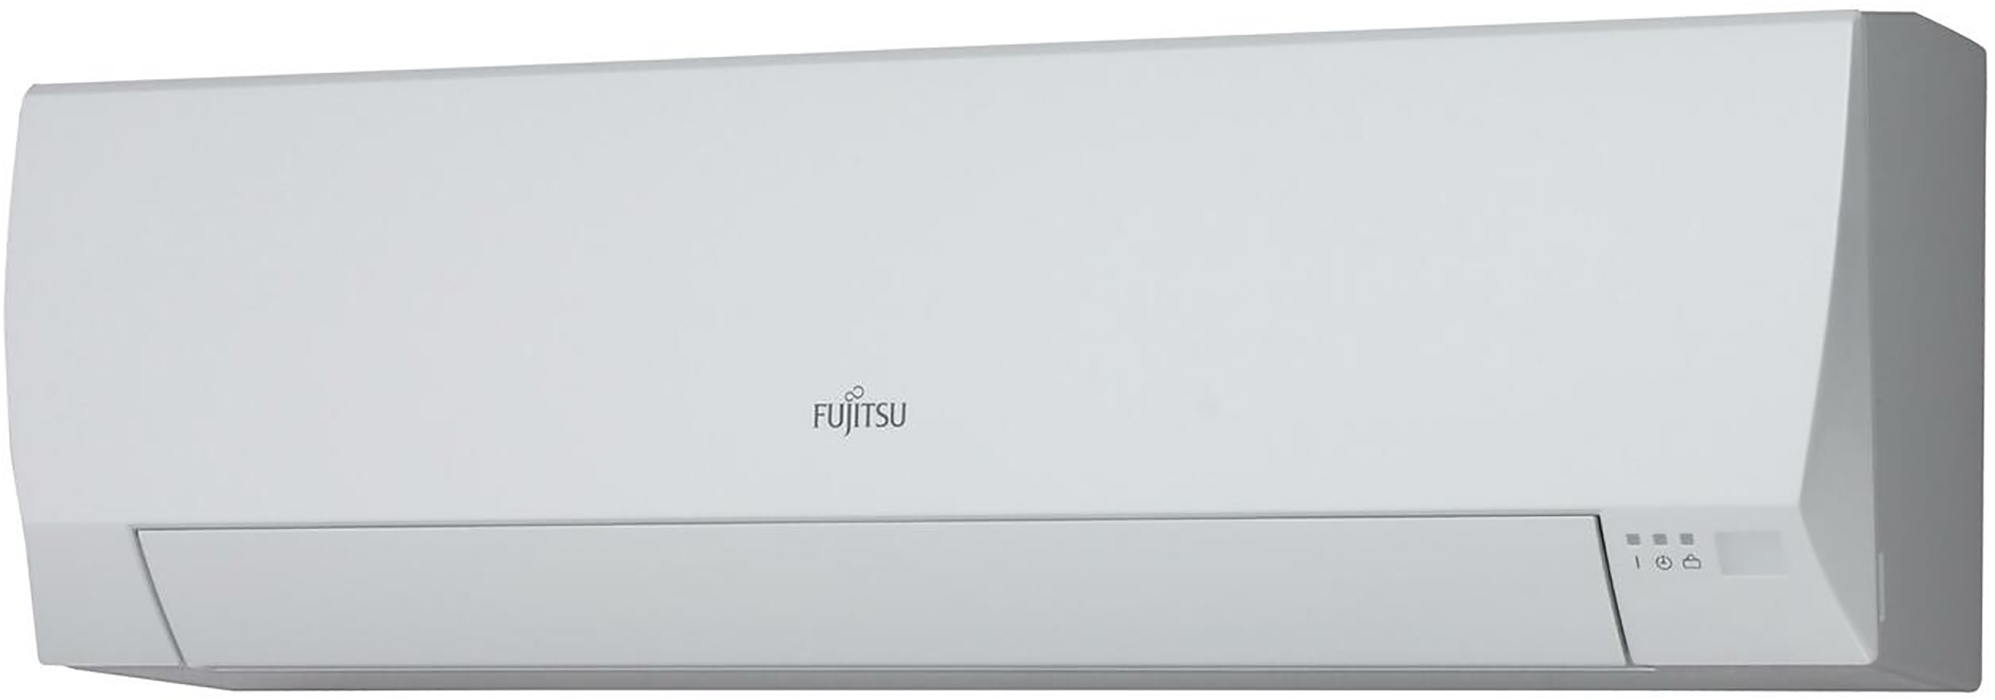 Кондиционер сплит-система Fujitsu ASYG36LMTA/AOYG36LMTA цена 0 грн - фотография 2